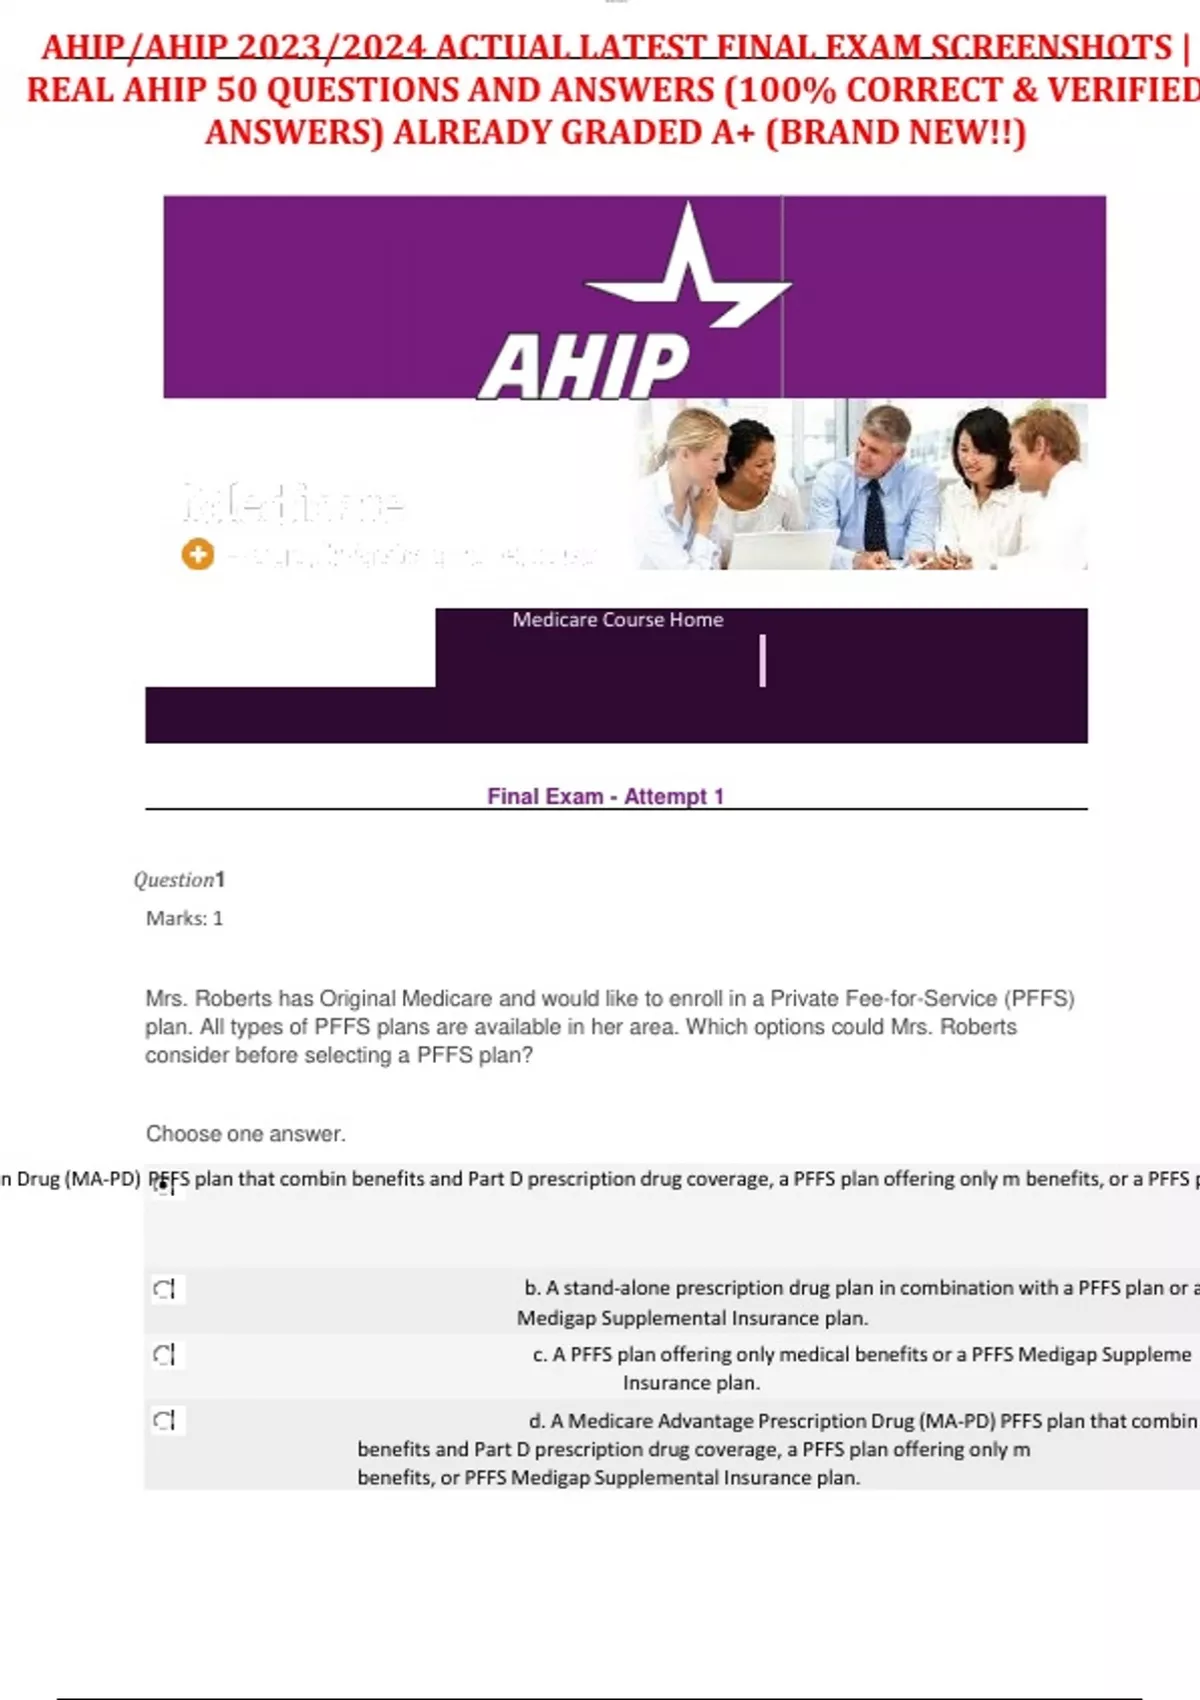 AHIP/AHIP 2023/2024 ACTUAL LATEST FINAL EXAM SCREENSHOTS REAL AHIP 50